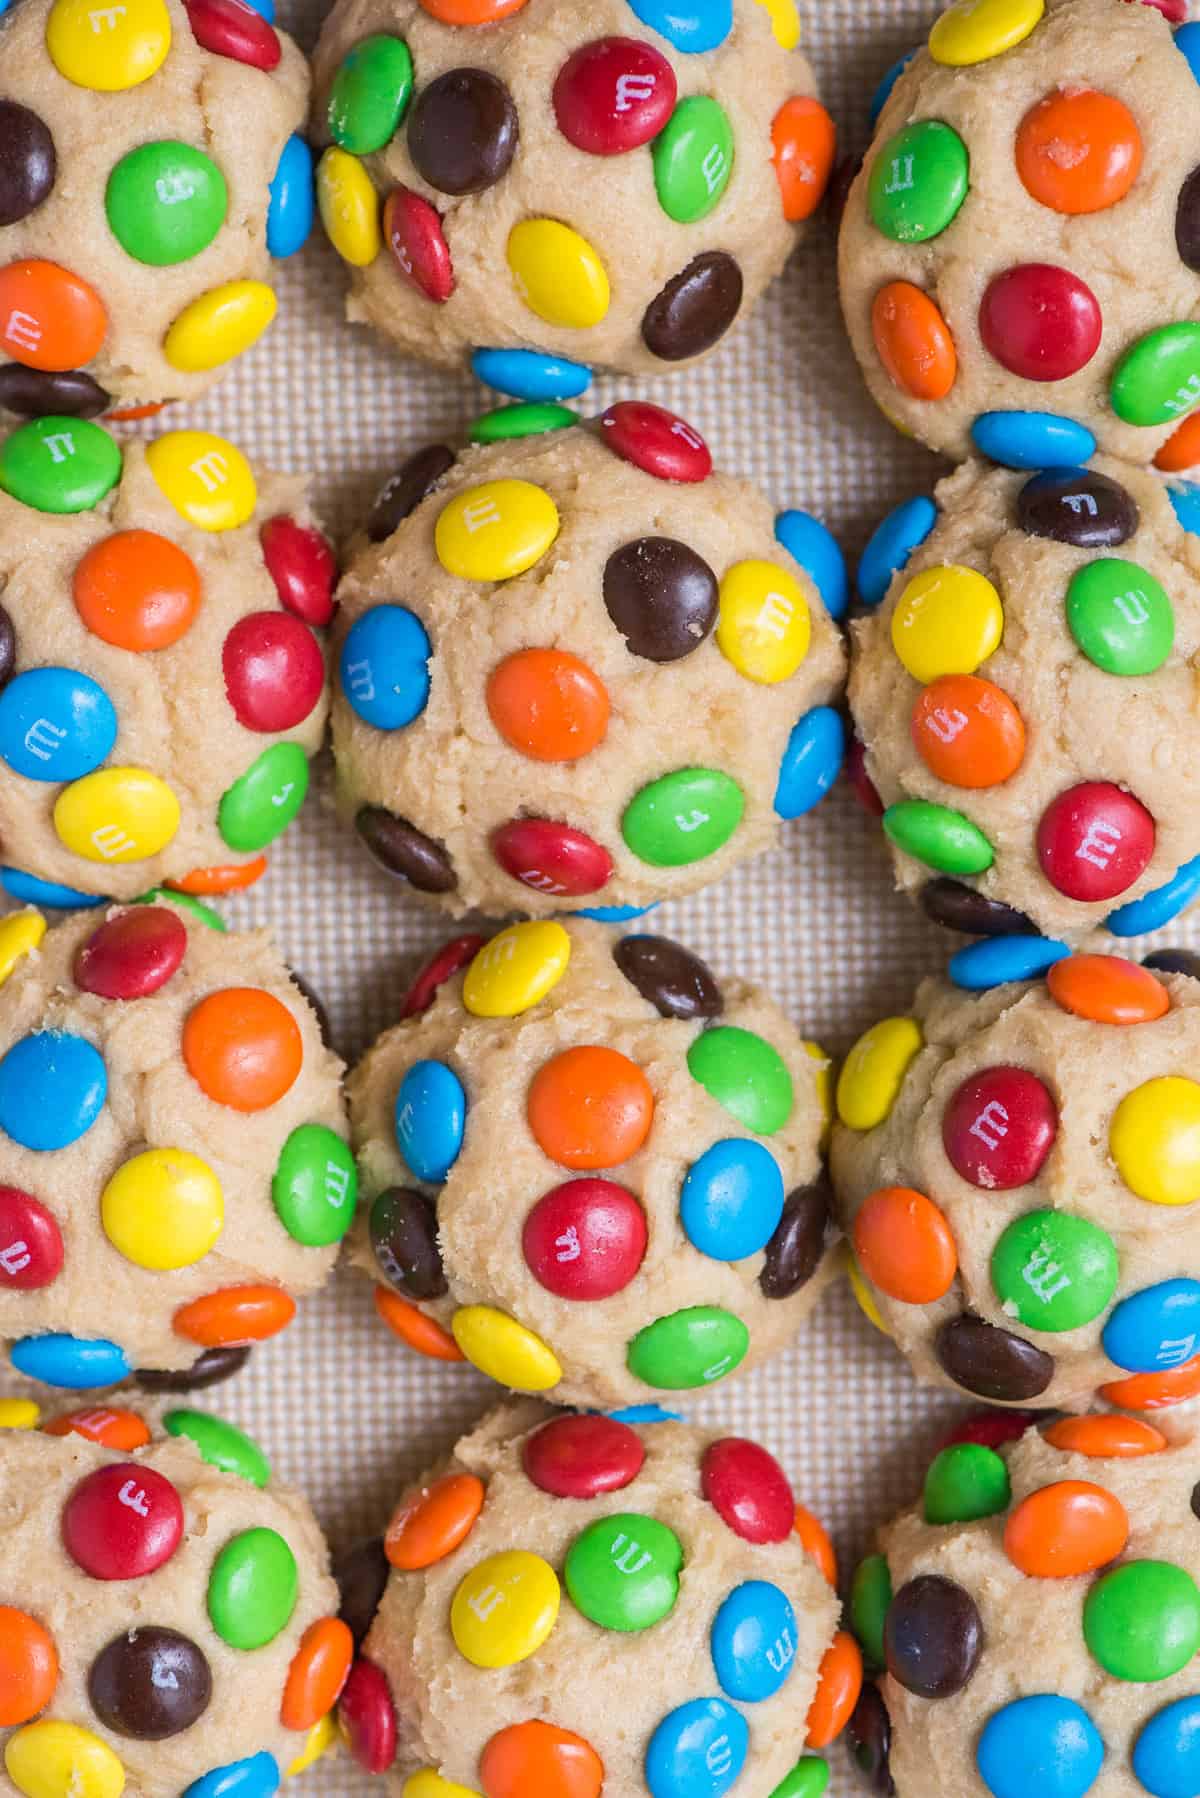 M&M cookie dough balls arranged in a grid pattern